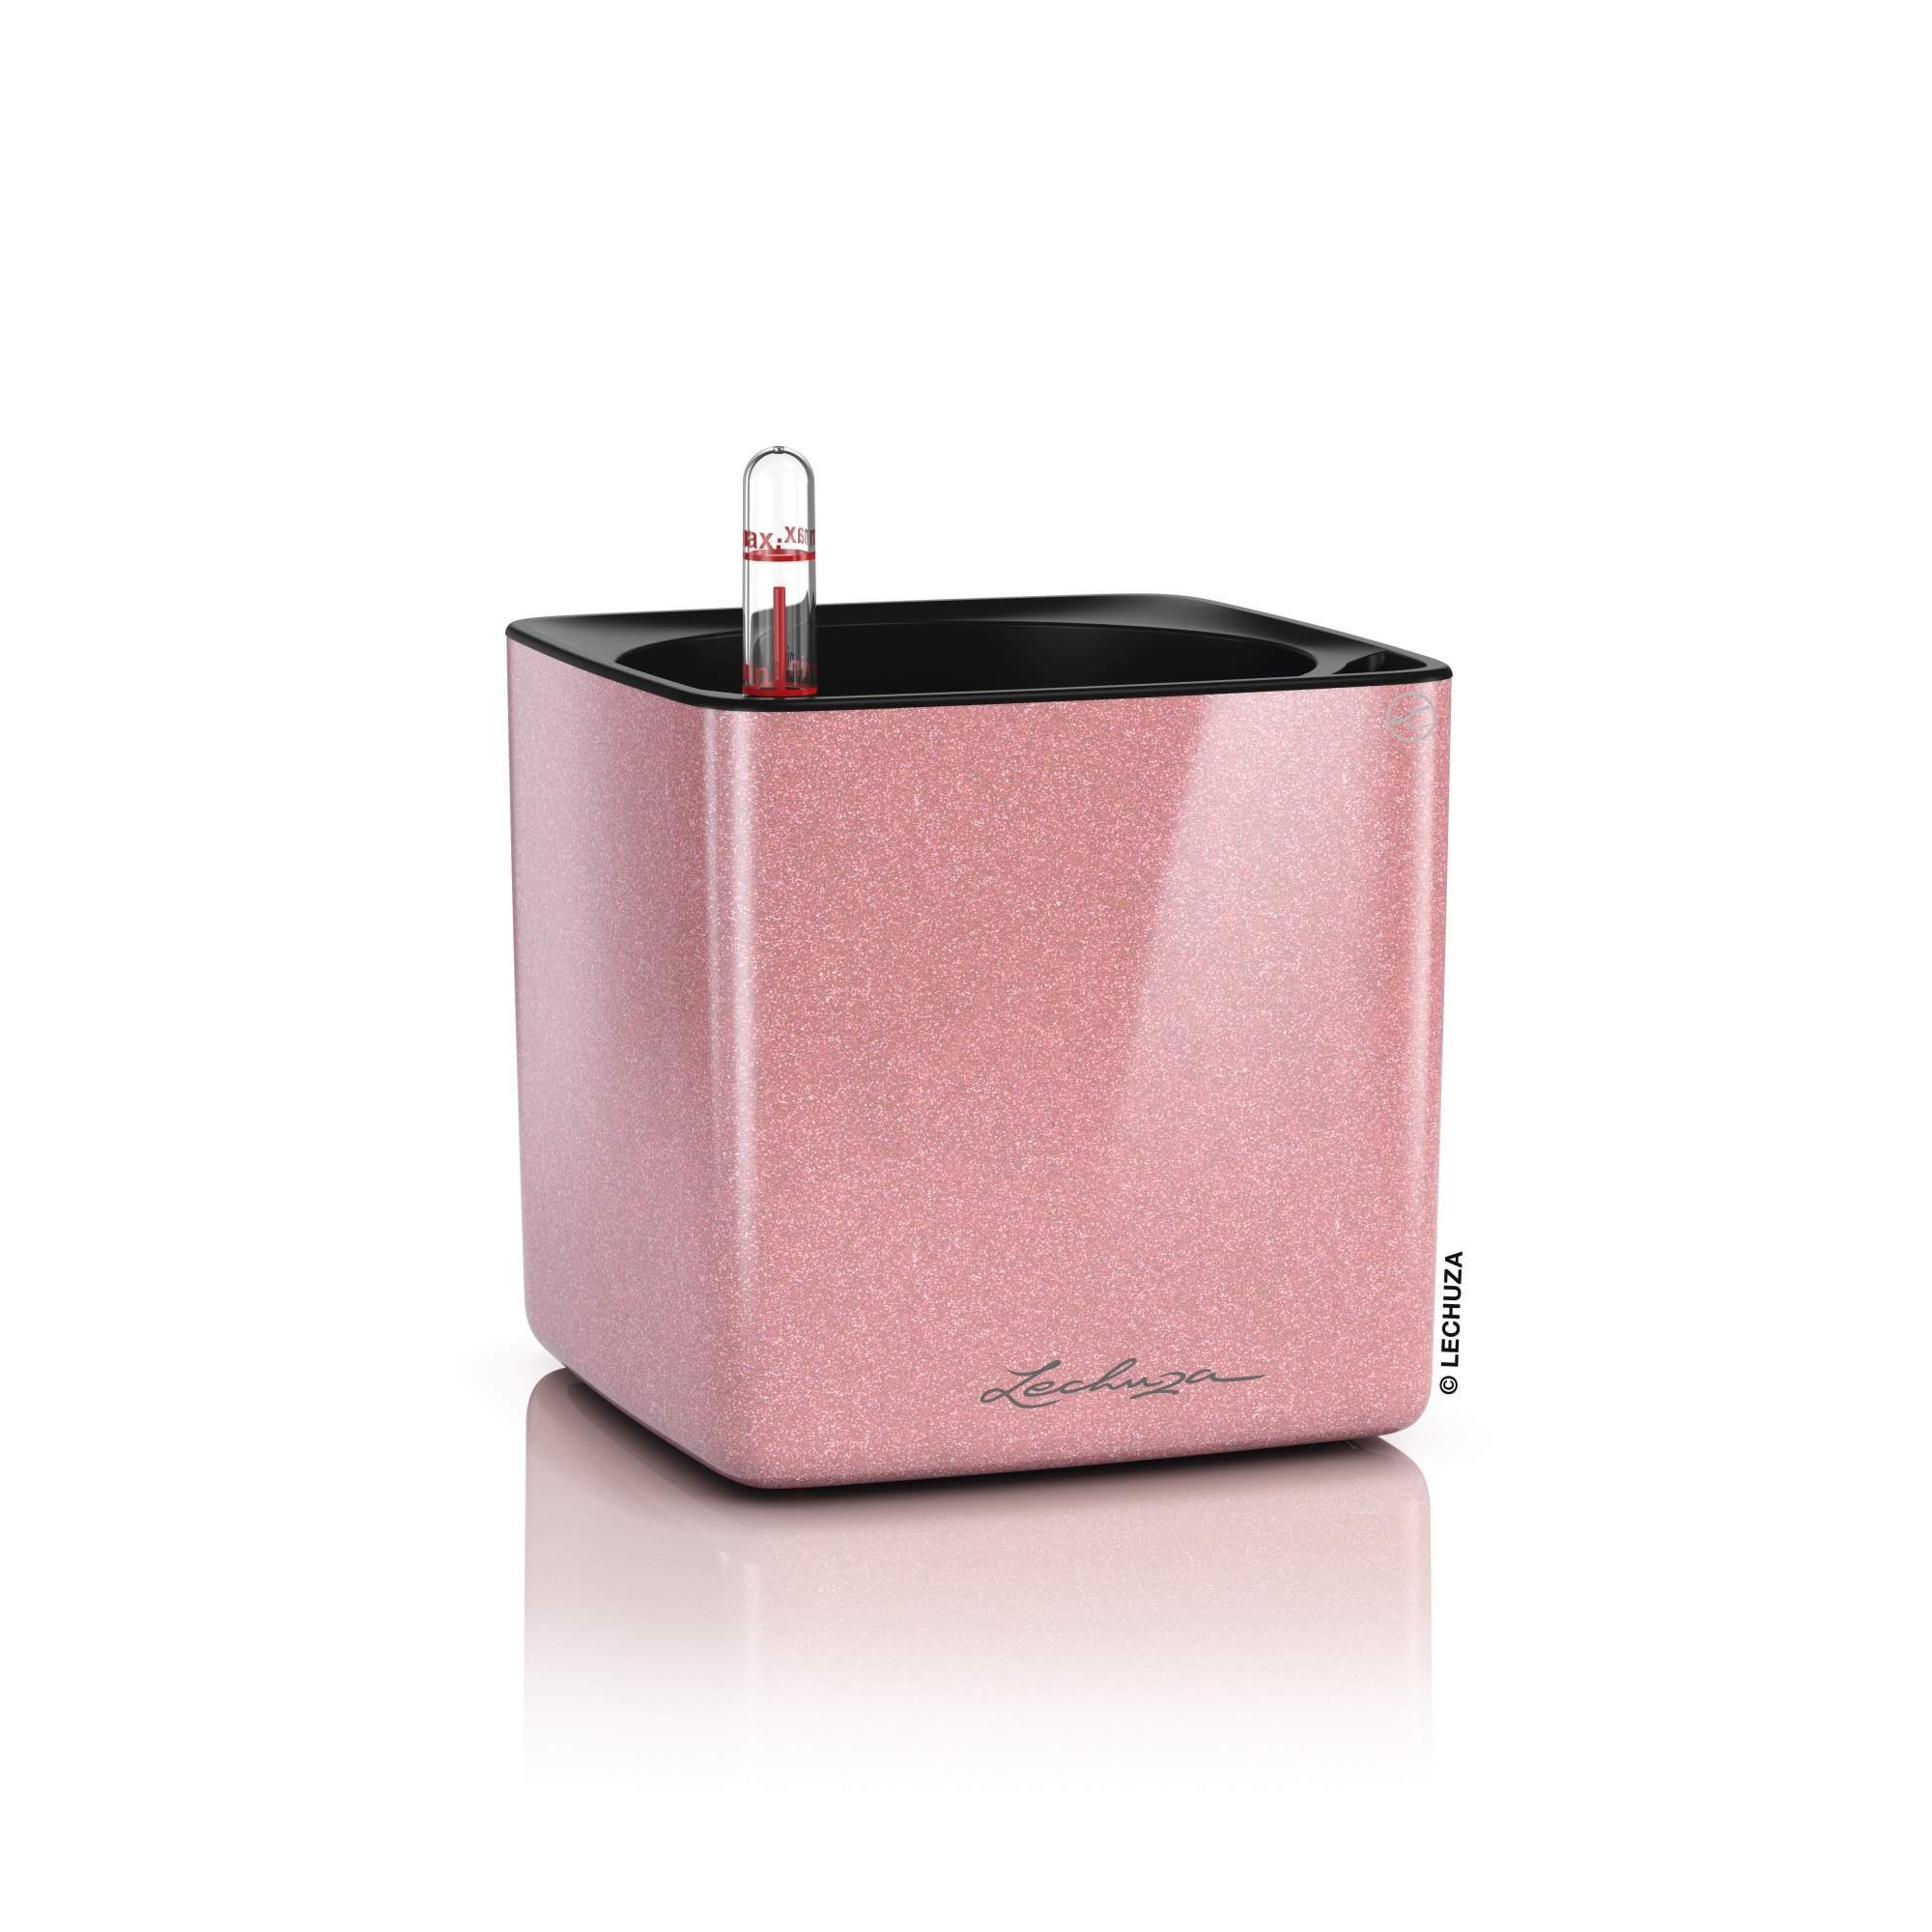 Cube glitter Kiss Blumentopf Lechuza® cashmere (1 14 cream Glossy St) rosa highgloss